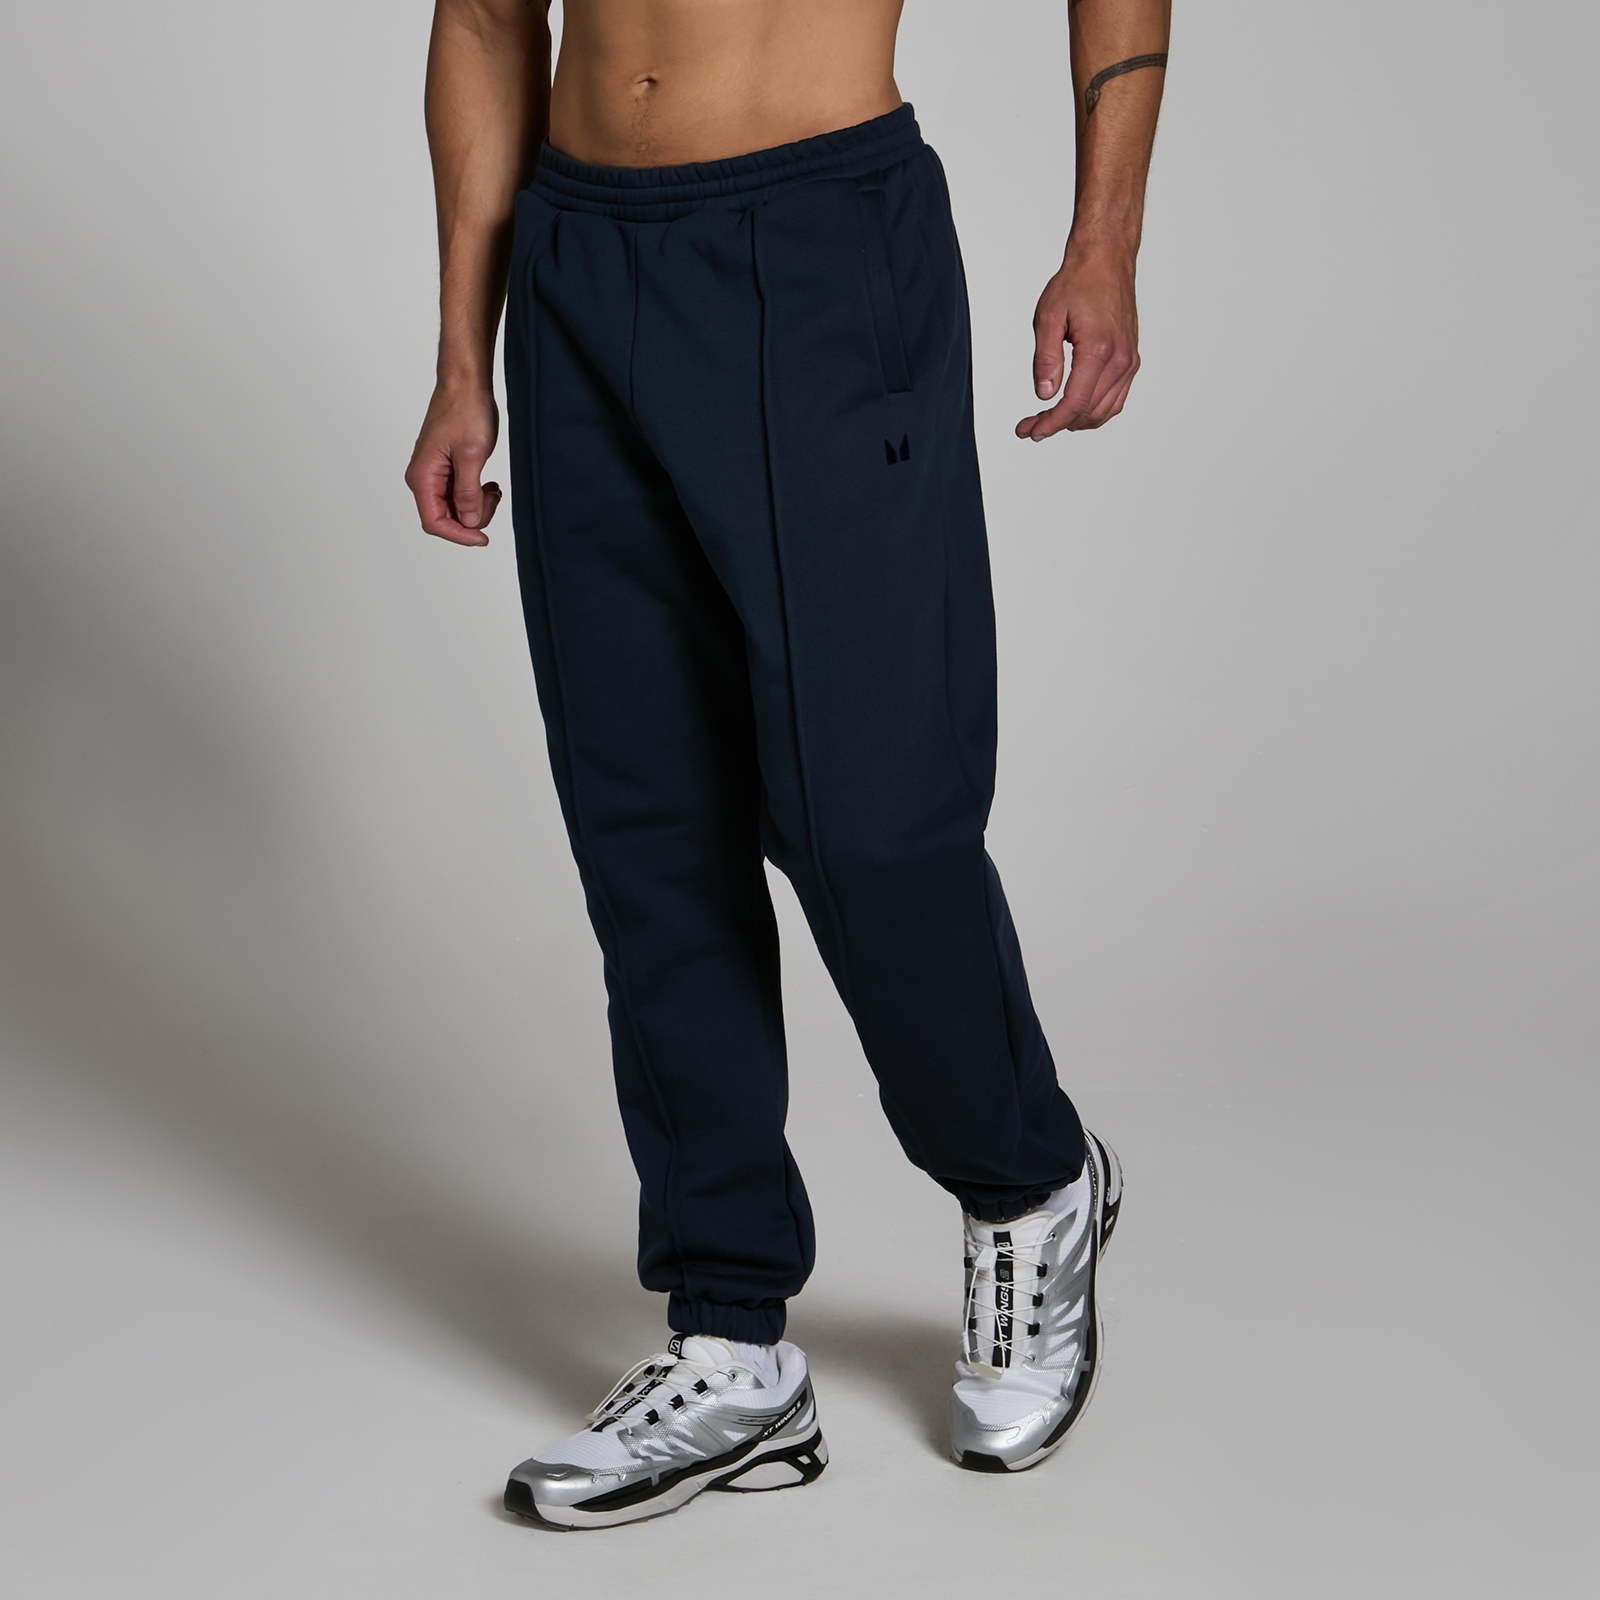 Image of Pantaloni da jogging pesanti oversize MP Lifestyle da uomo - Blu navy scuro - XS